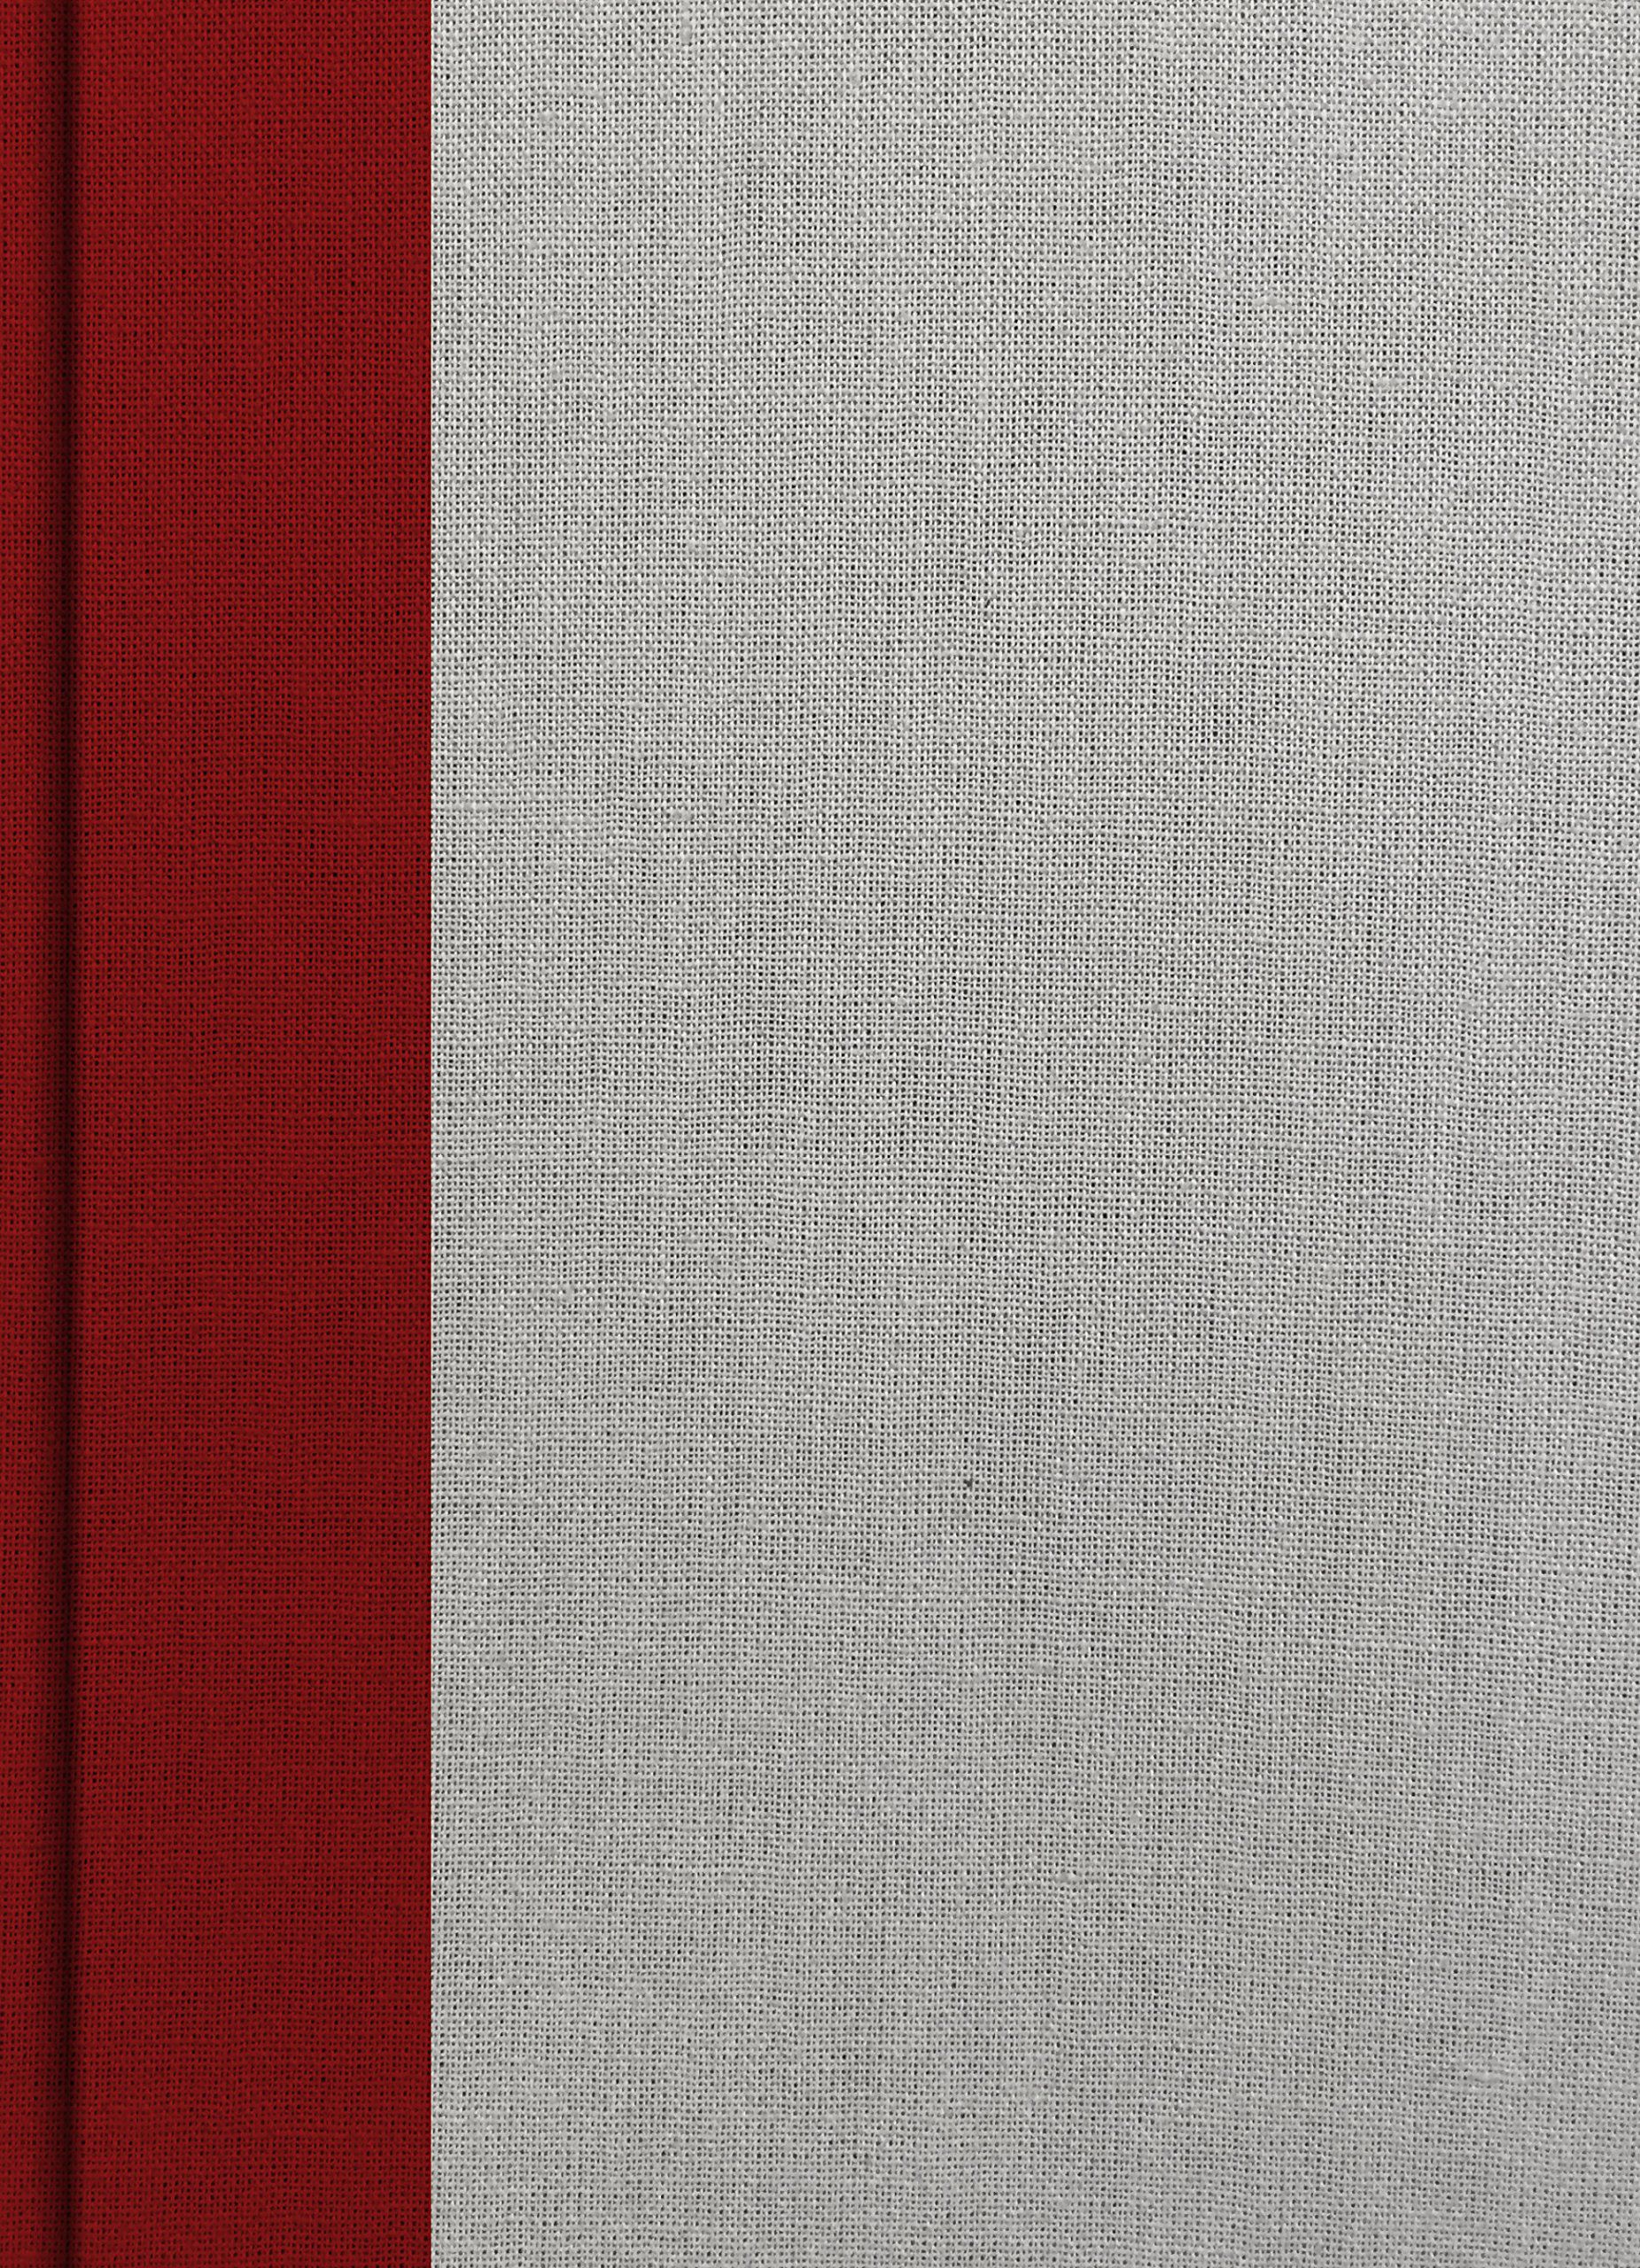 KJV Study Bible, Crimson/Gray Cloth Over Board